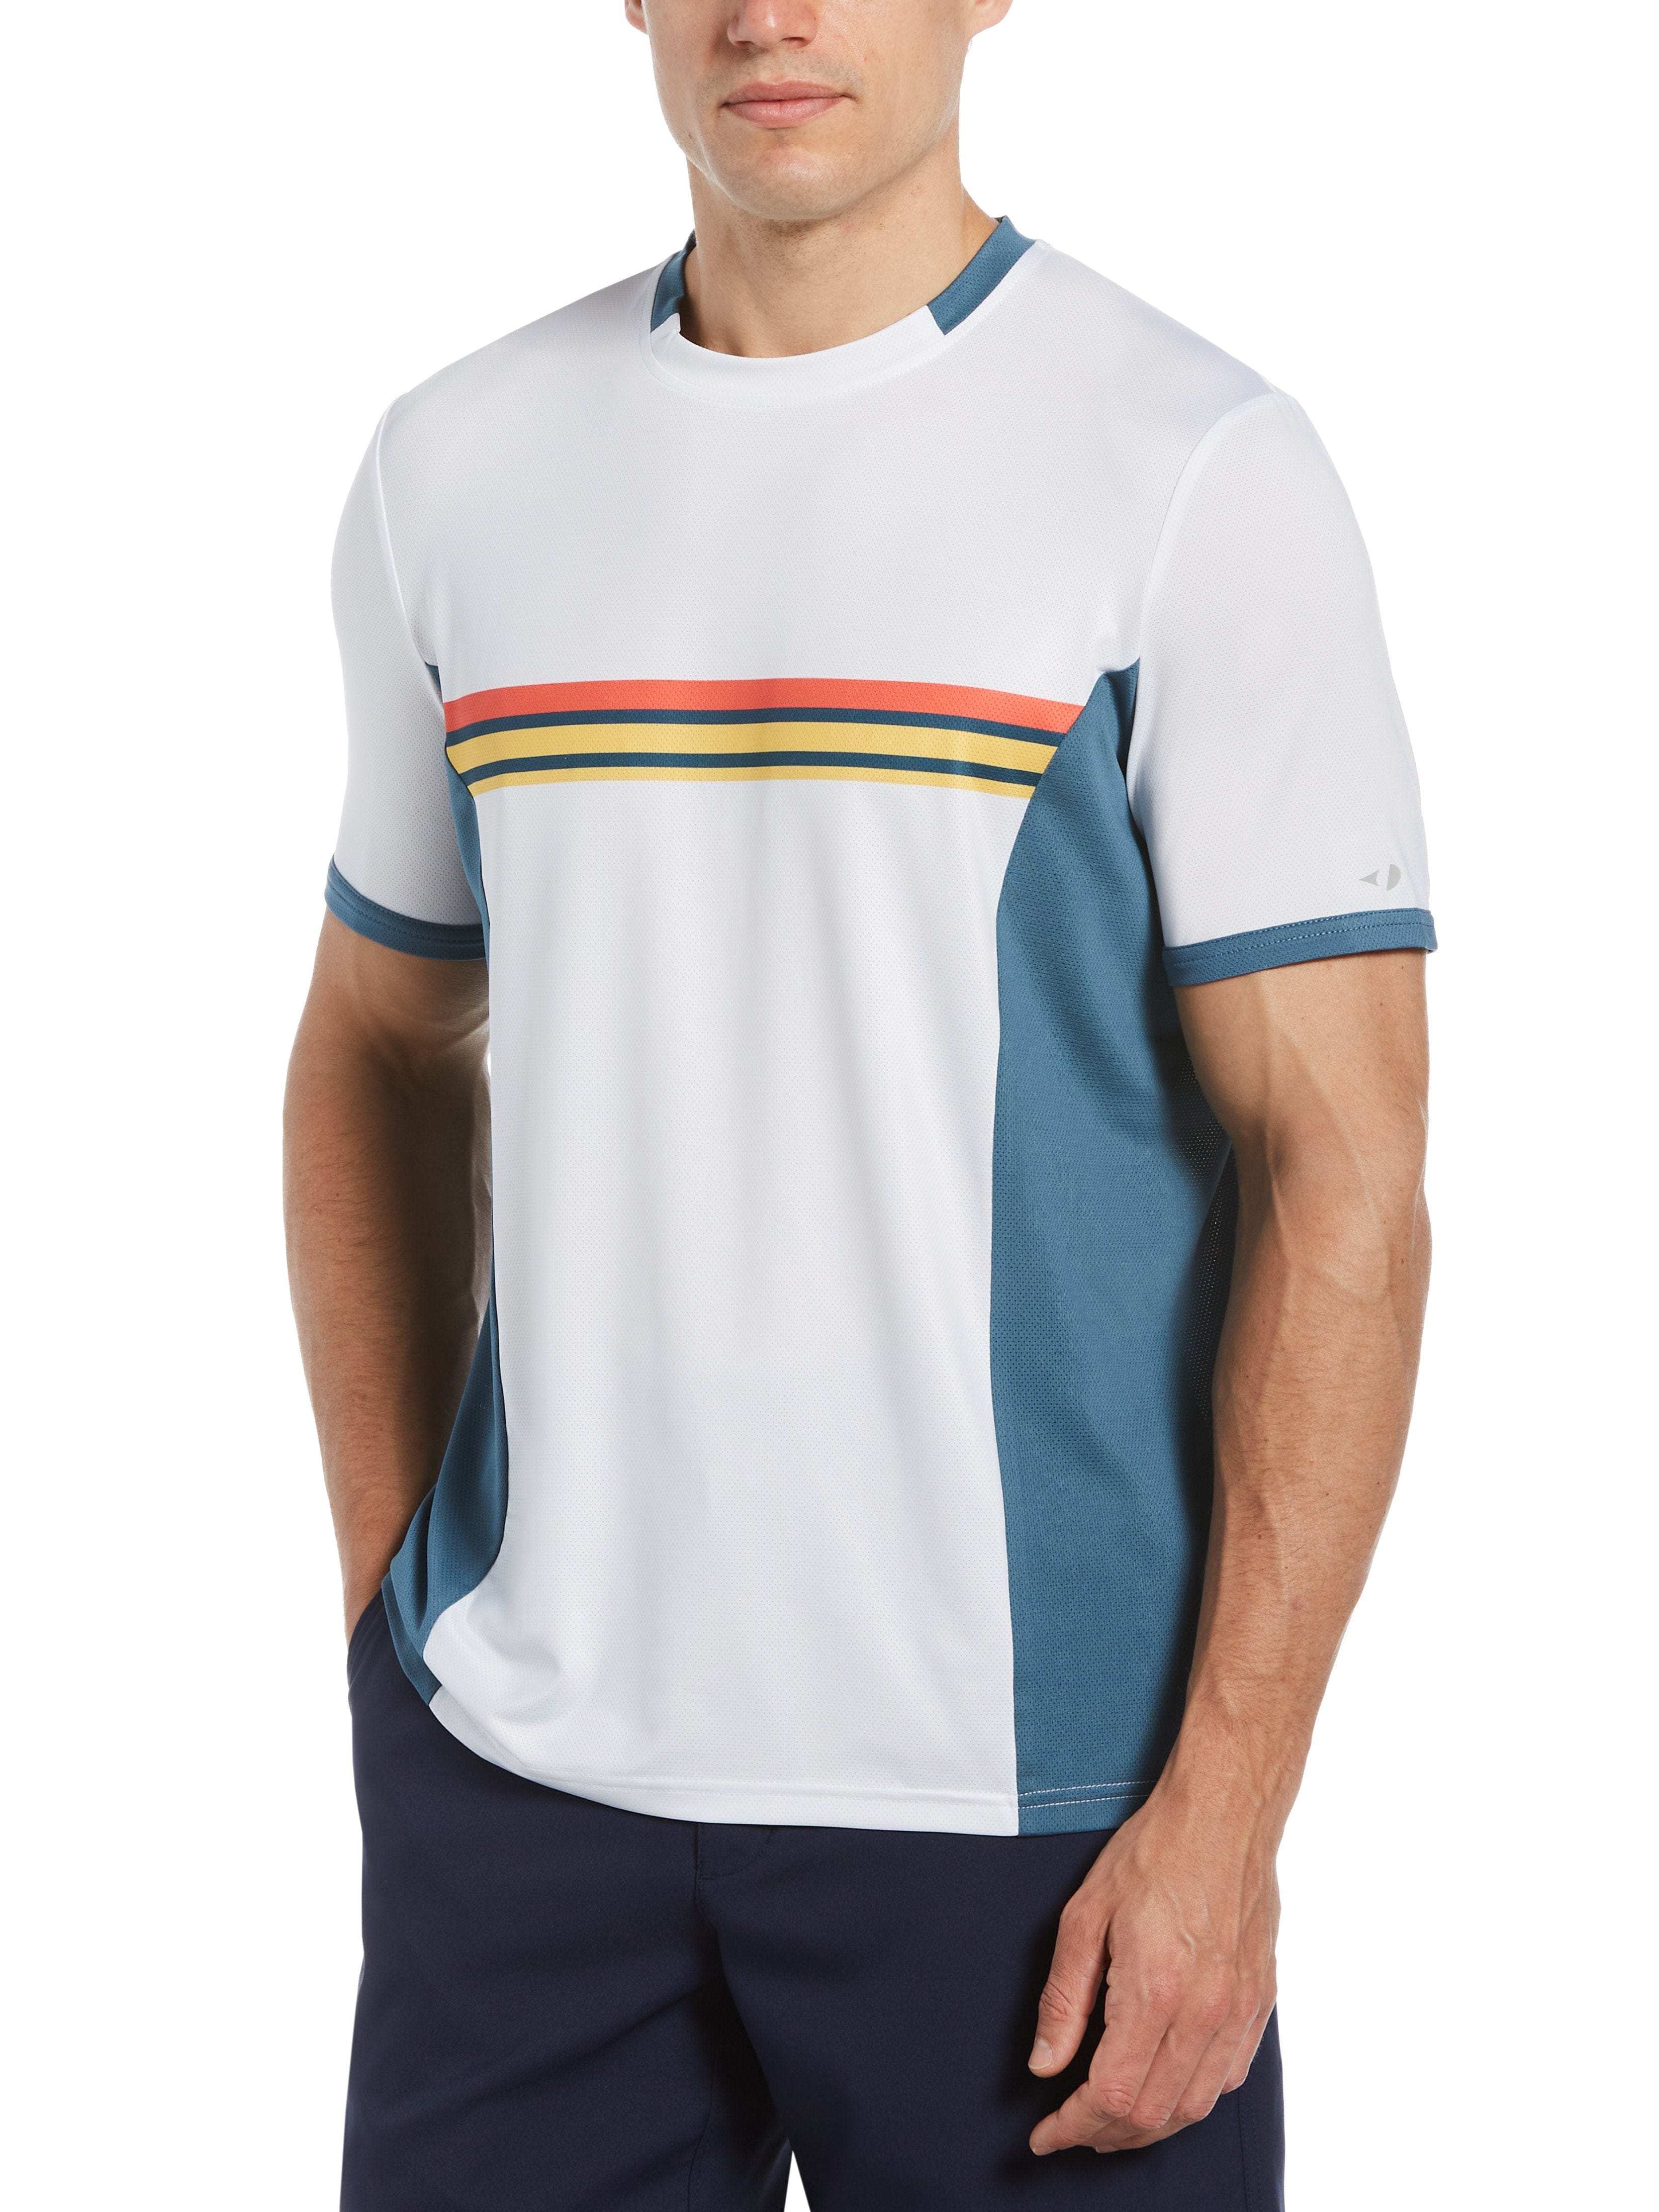 Grand Slam Mens Pieced Print Chest Stripe Crew Neck Tennis T-Shirt, Size Large, White, Polyester/Spandex | Golf Apparel Shop